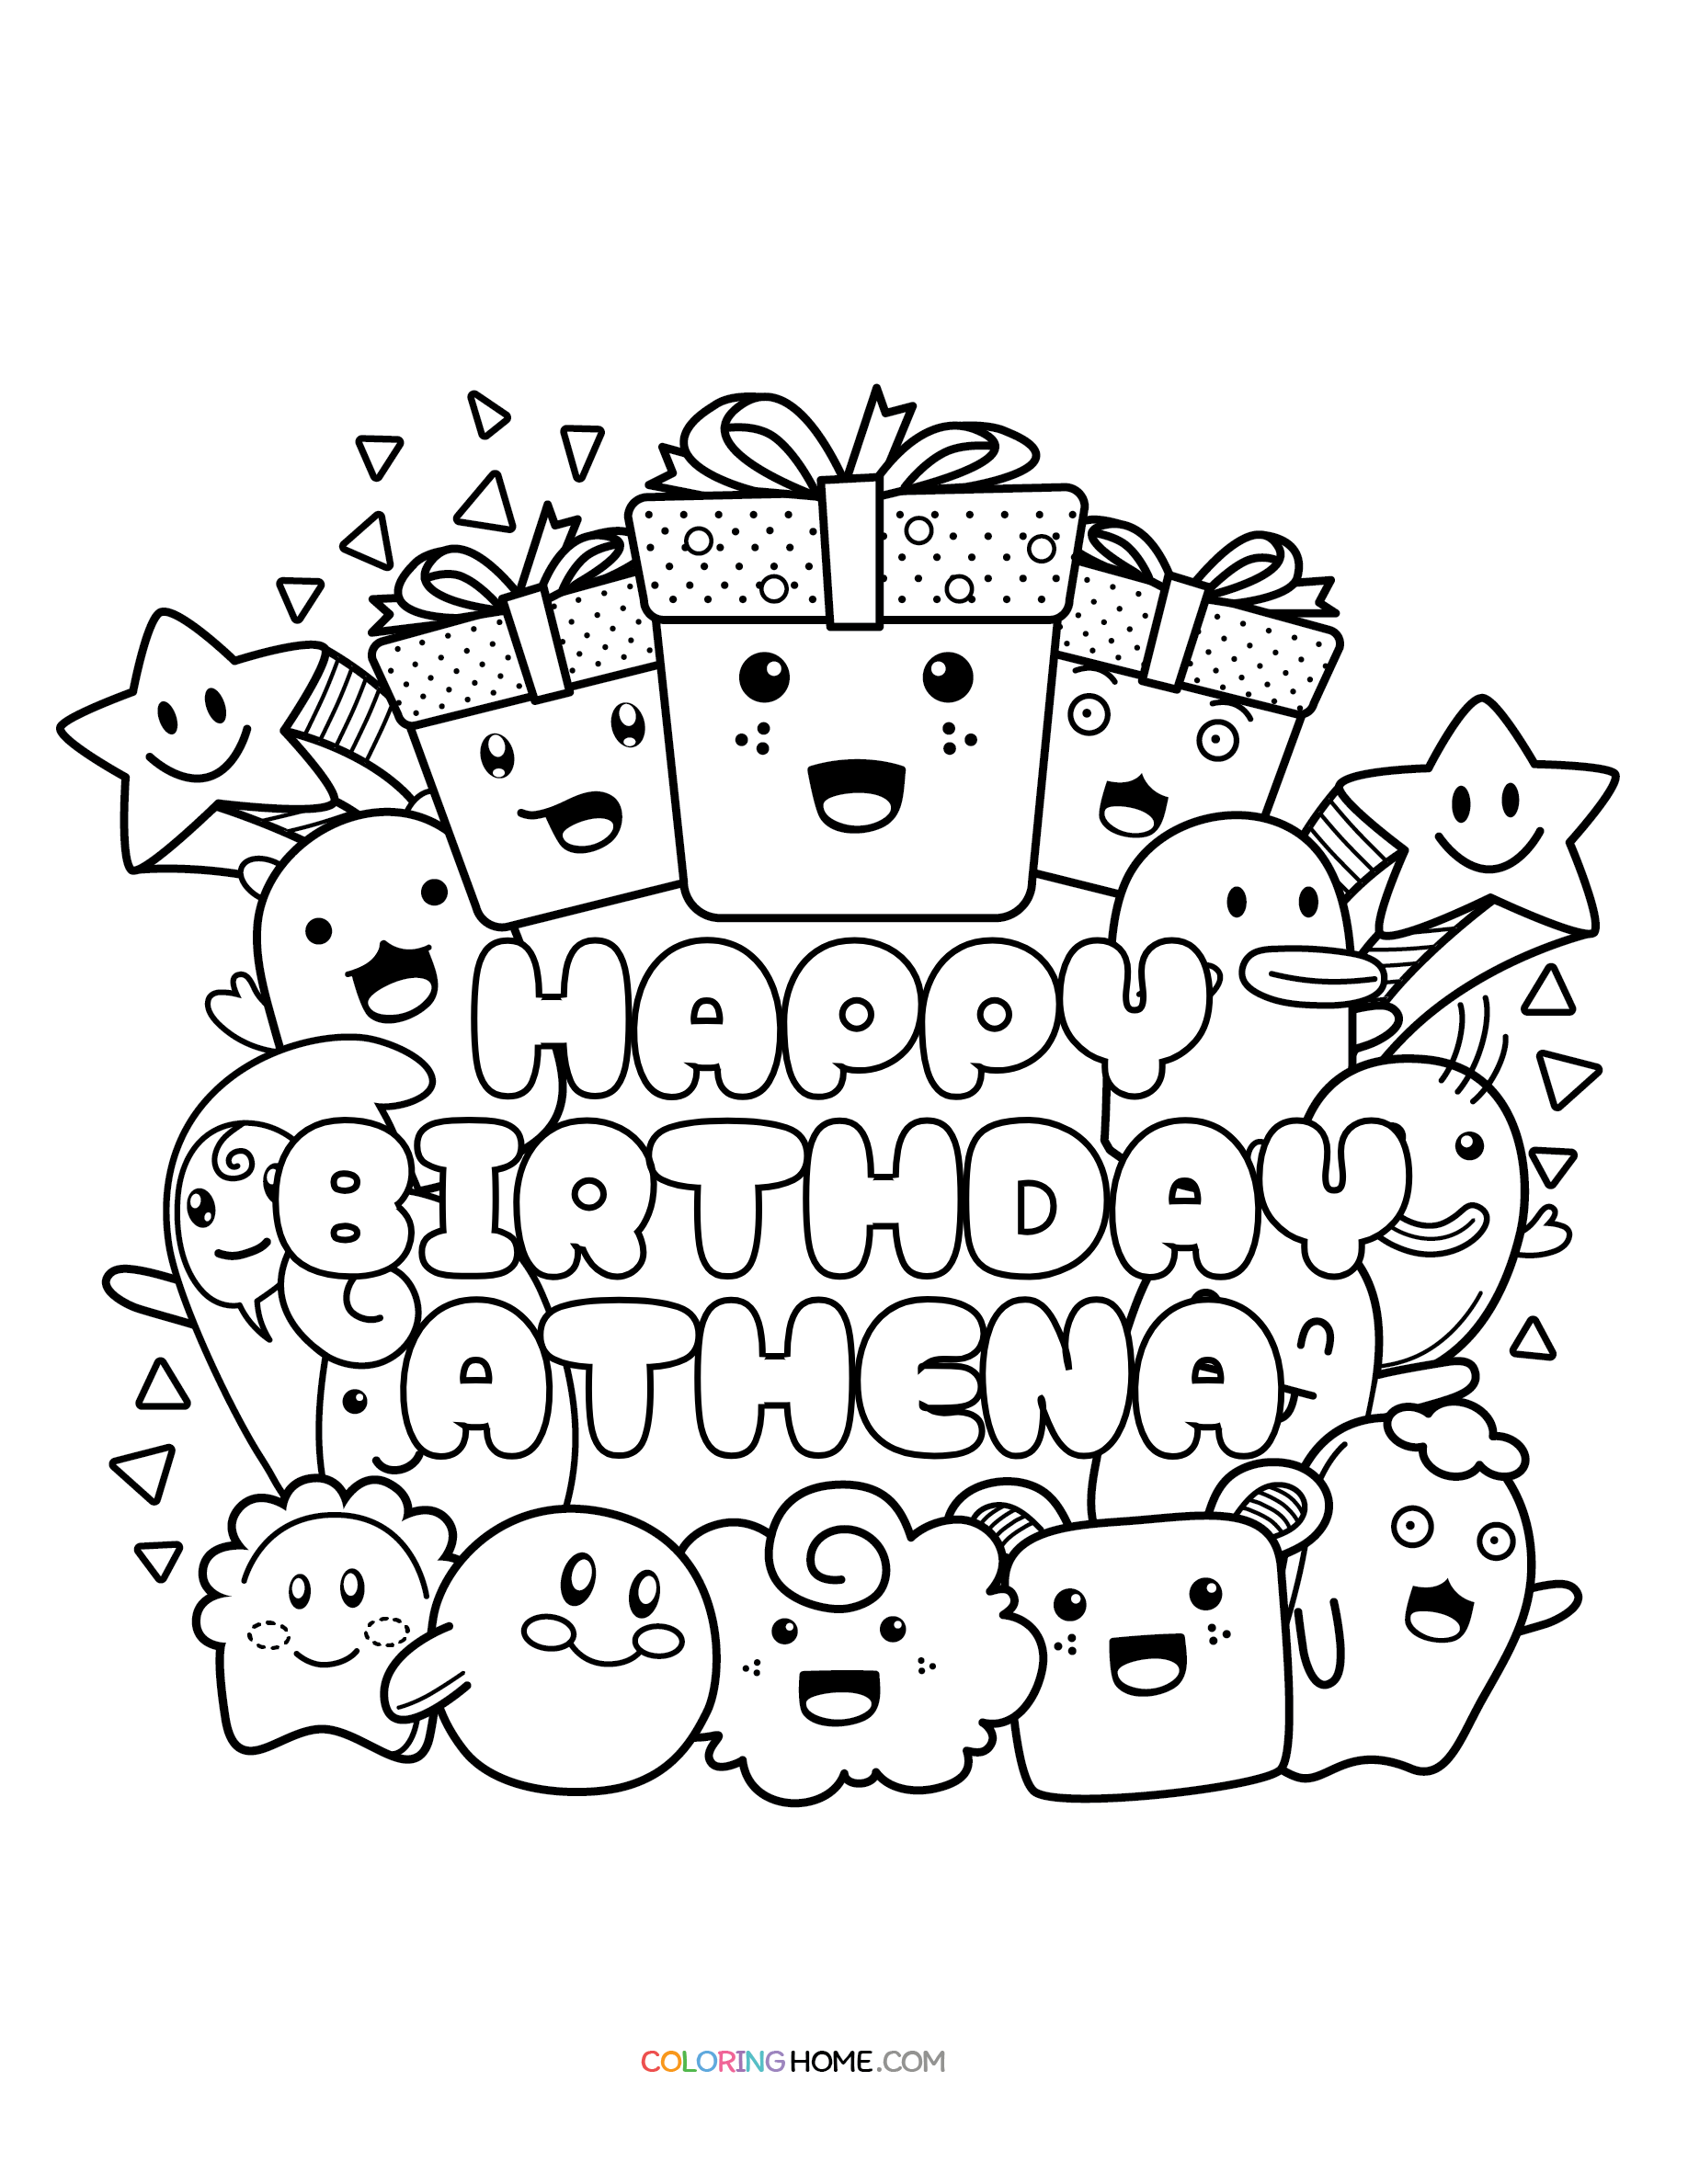 Happy Birthday Athena coloring page